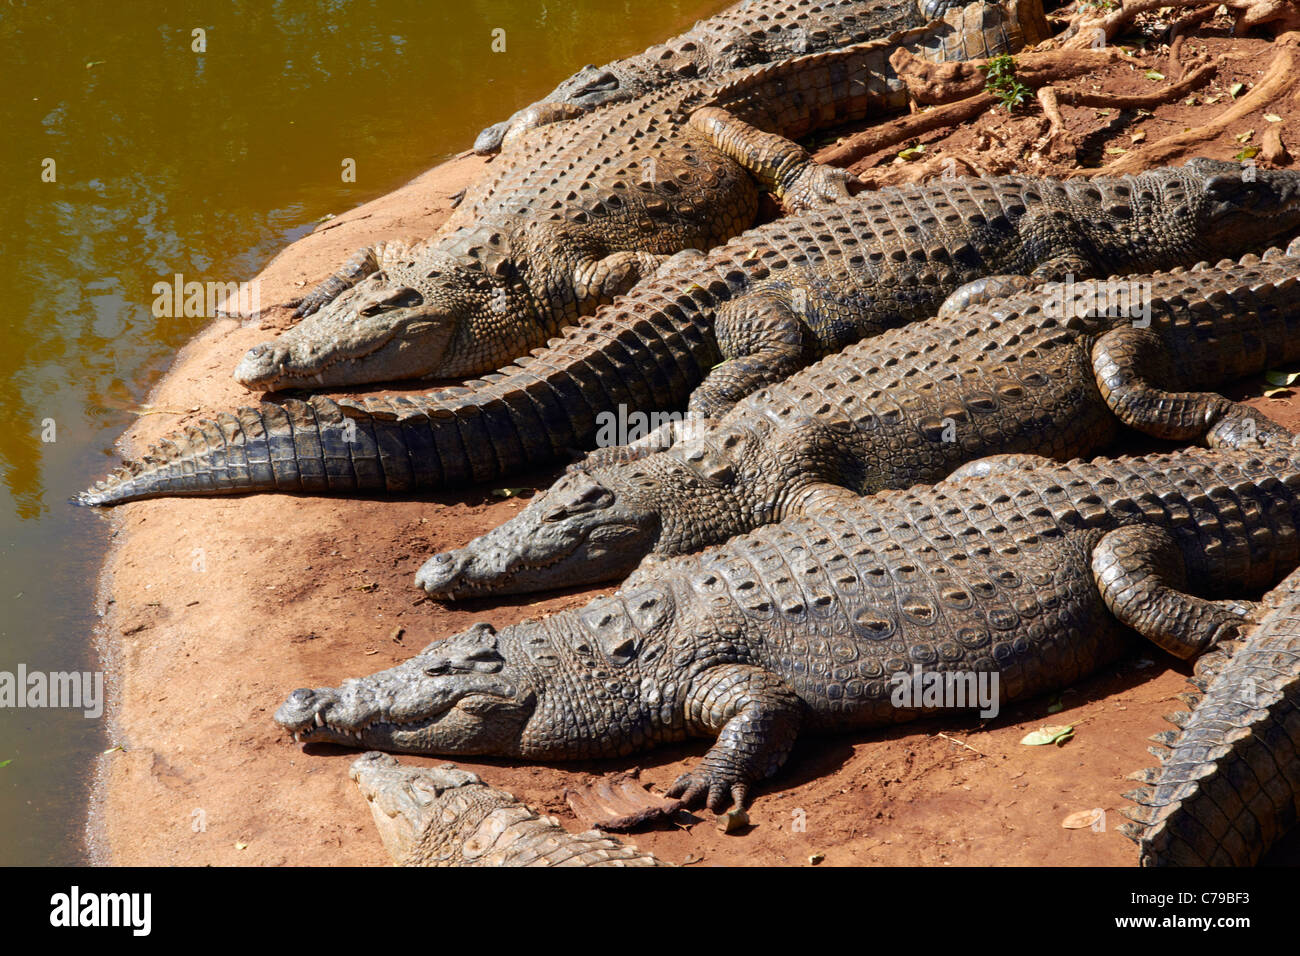 Nile Crocodiles at Crocworld, near Scottburgh, KwaZulu-Natal, South Africa. Stock Photo